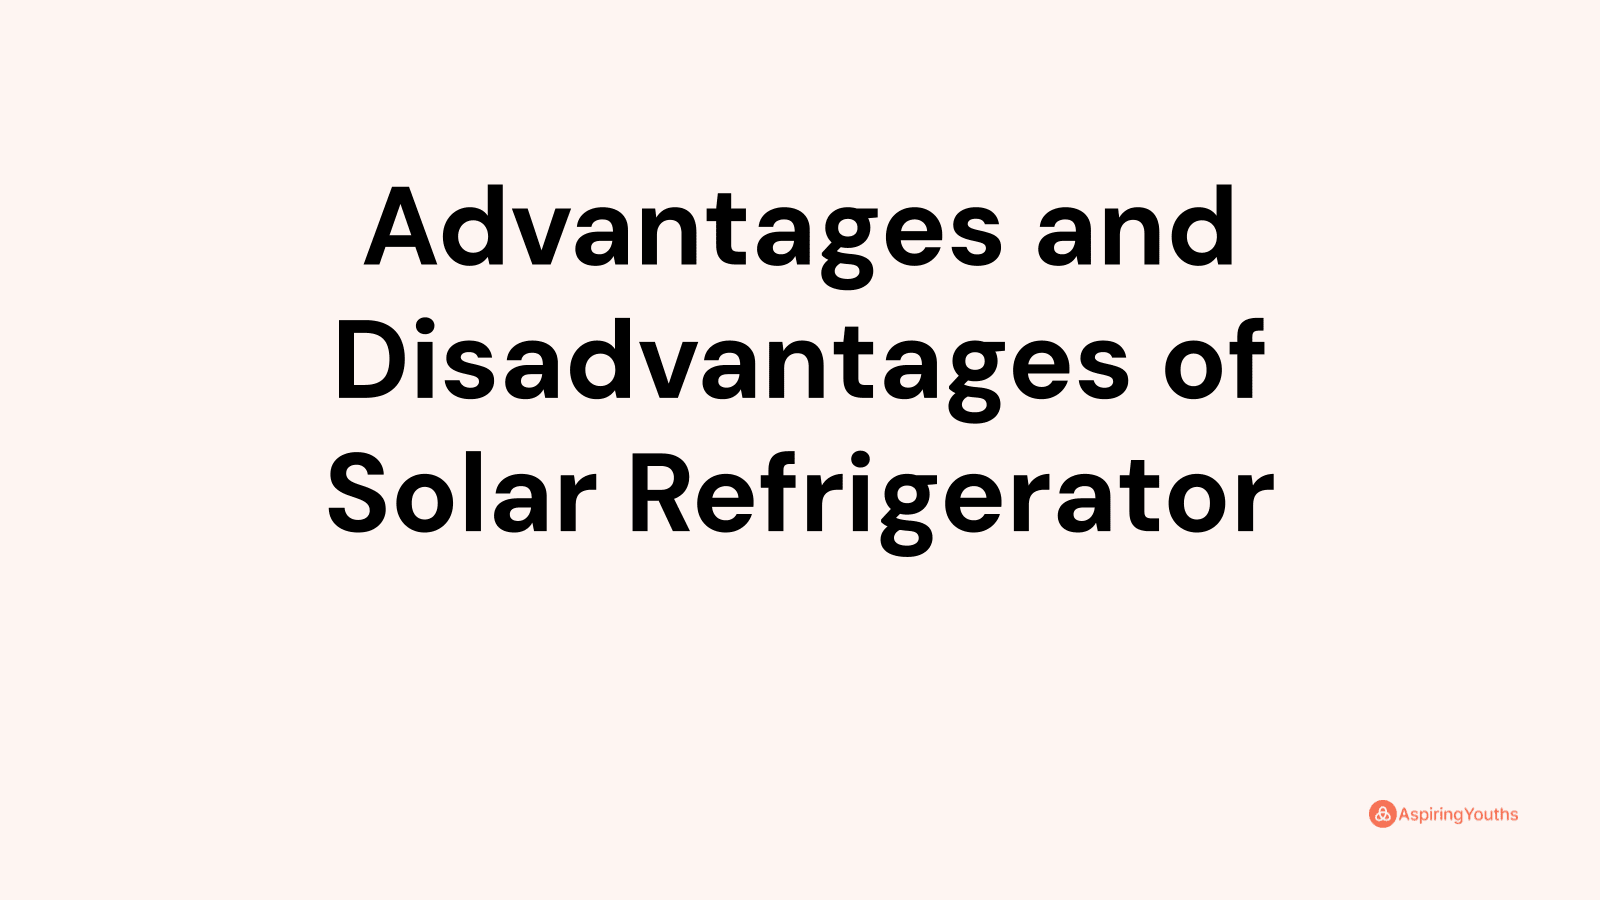 Advantages and disadvantages of Solar Refrigerator